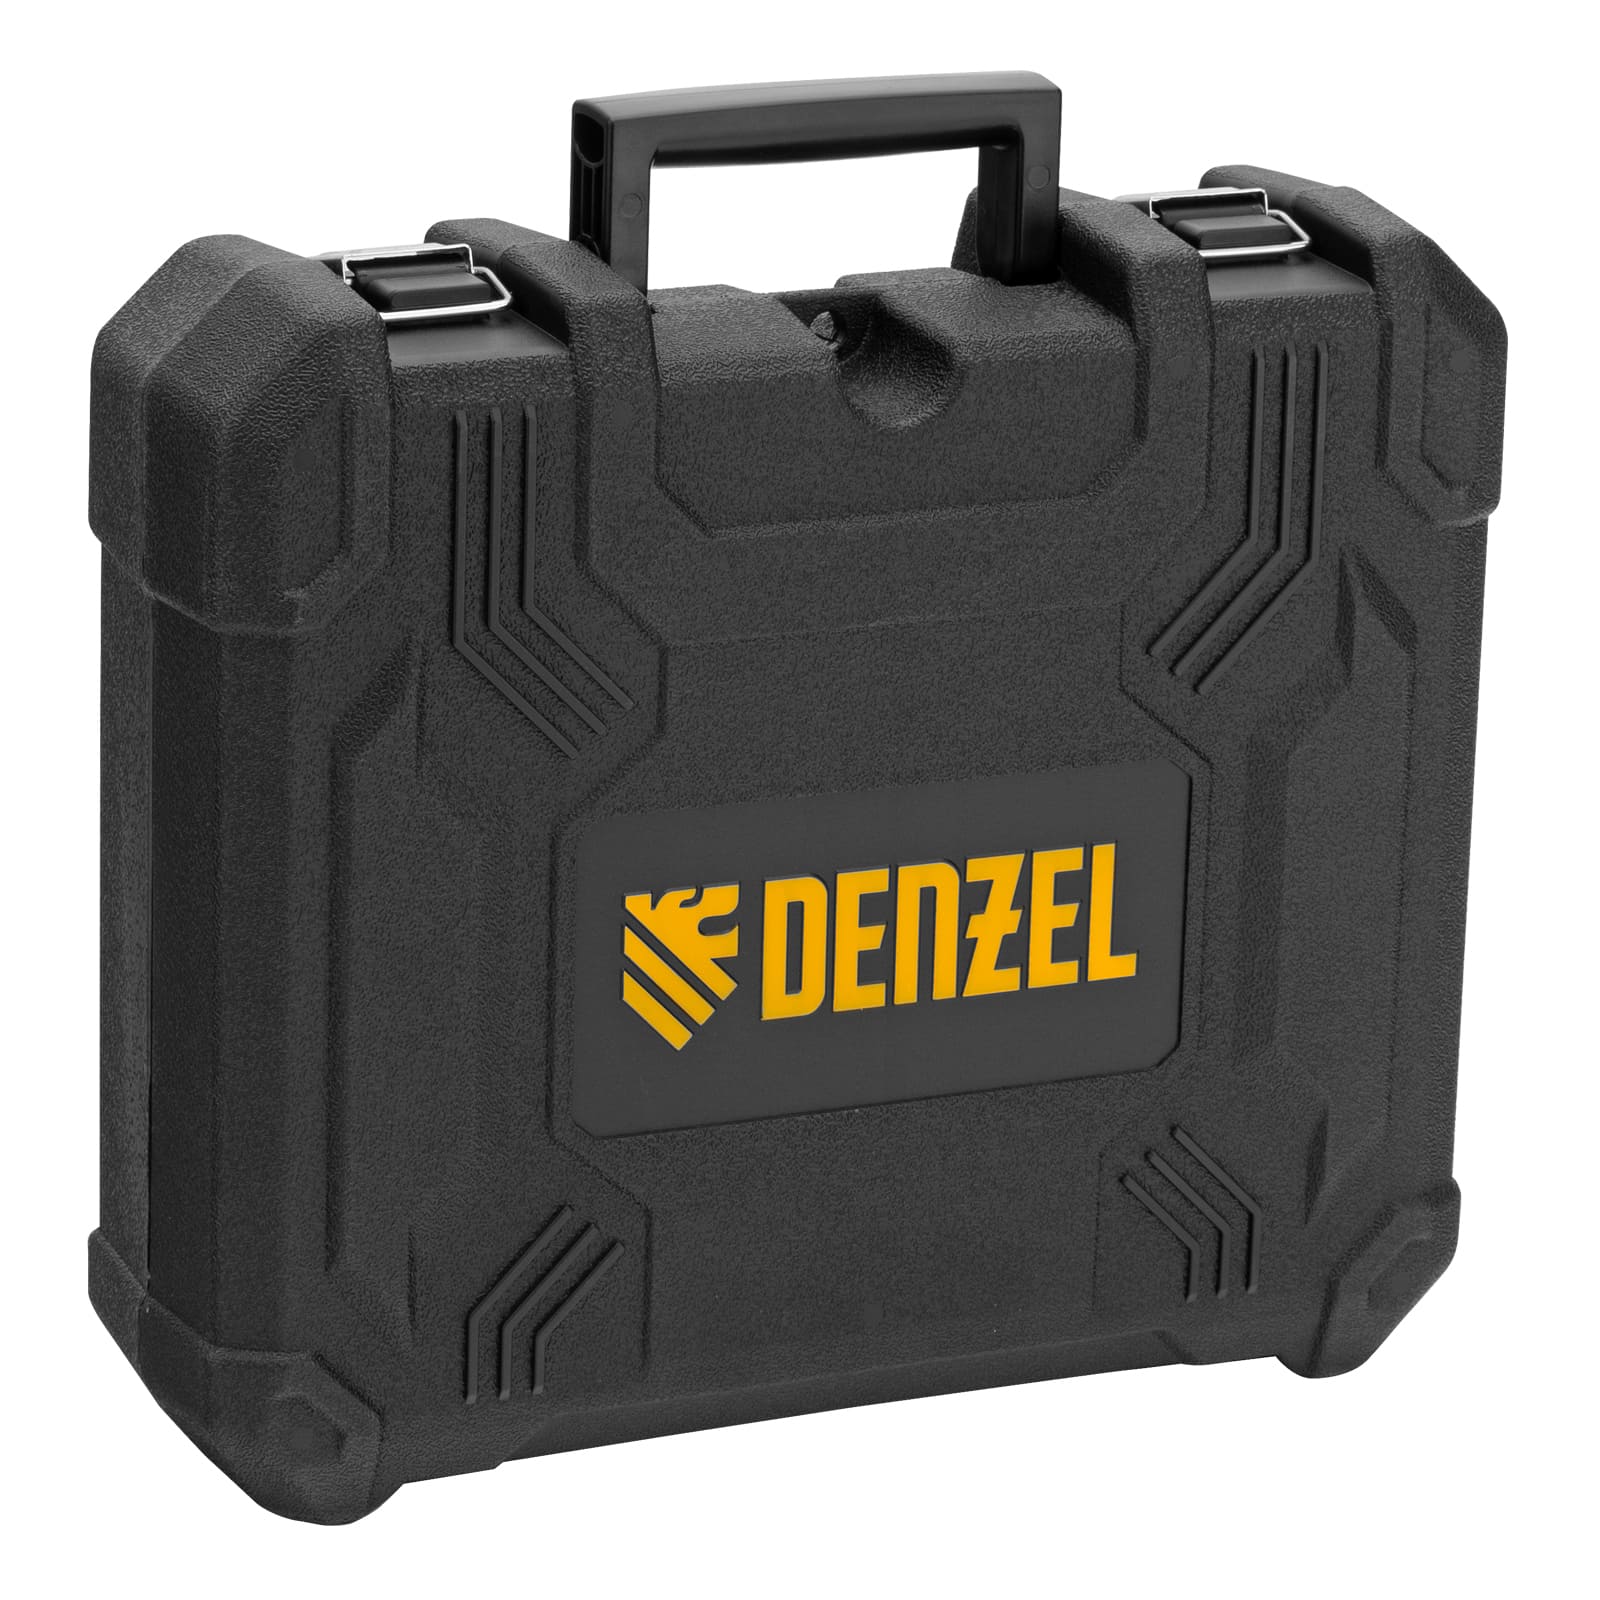 Аккумуляторная дрель-шуруповерт DENZEL CIDB-18-02 (аккум. система Denzel Battery System 18V, бесщёточная, ударная)